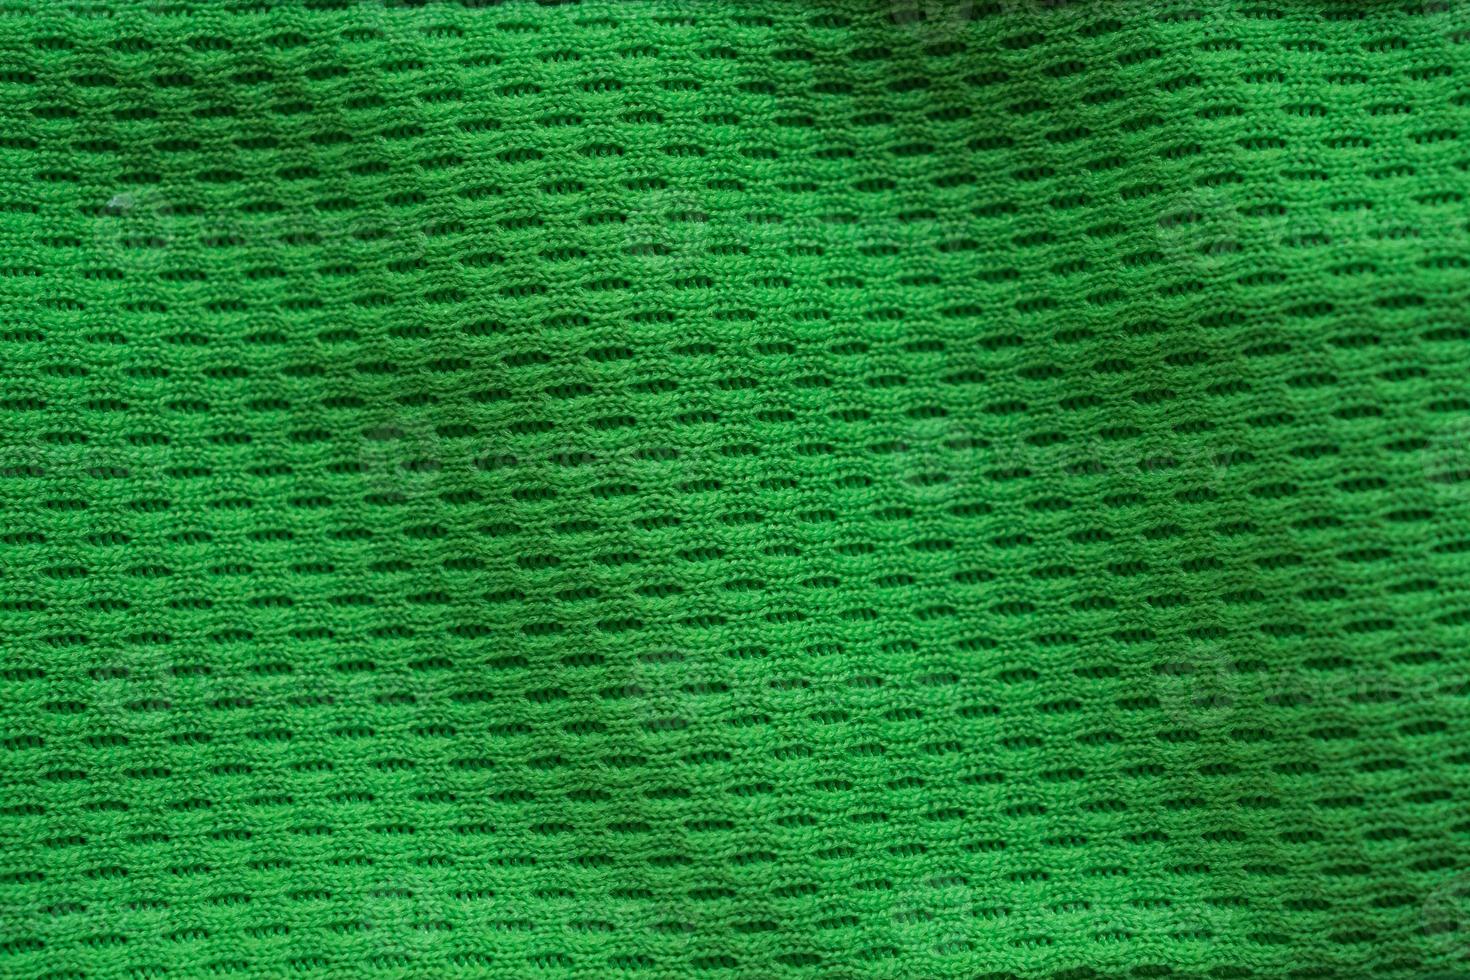 groene stof sportkleding voetbaltrui met luchtgaas textuur achtergrond foto